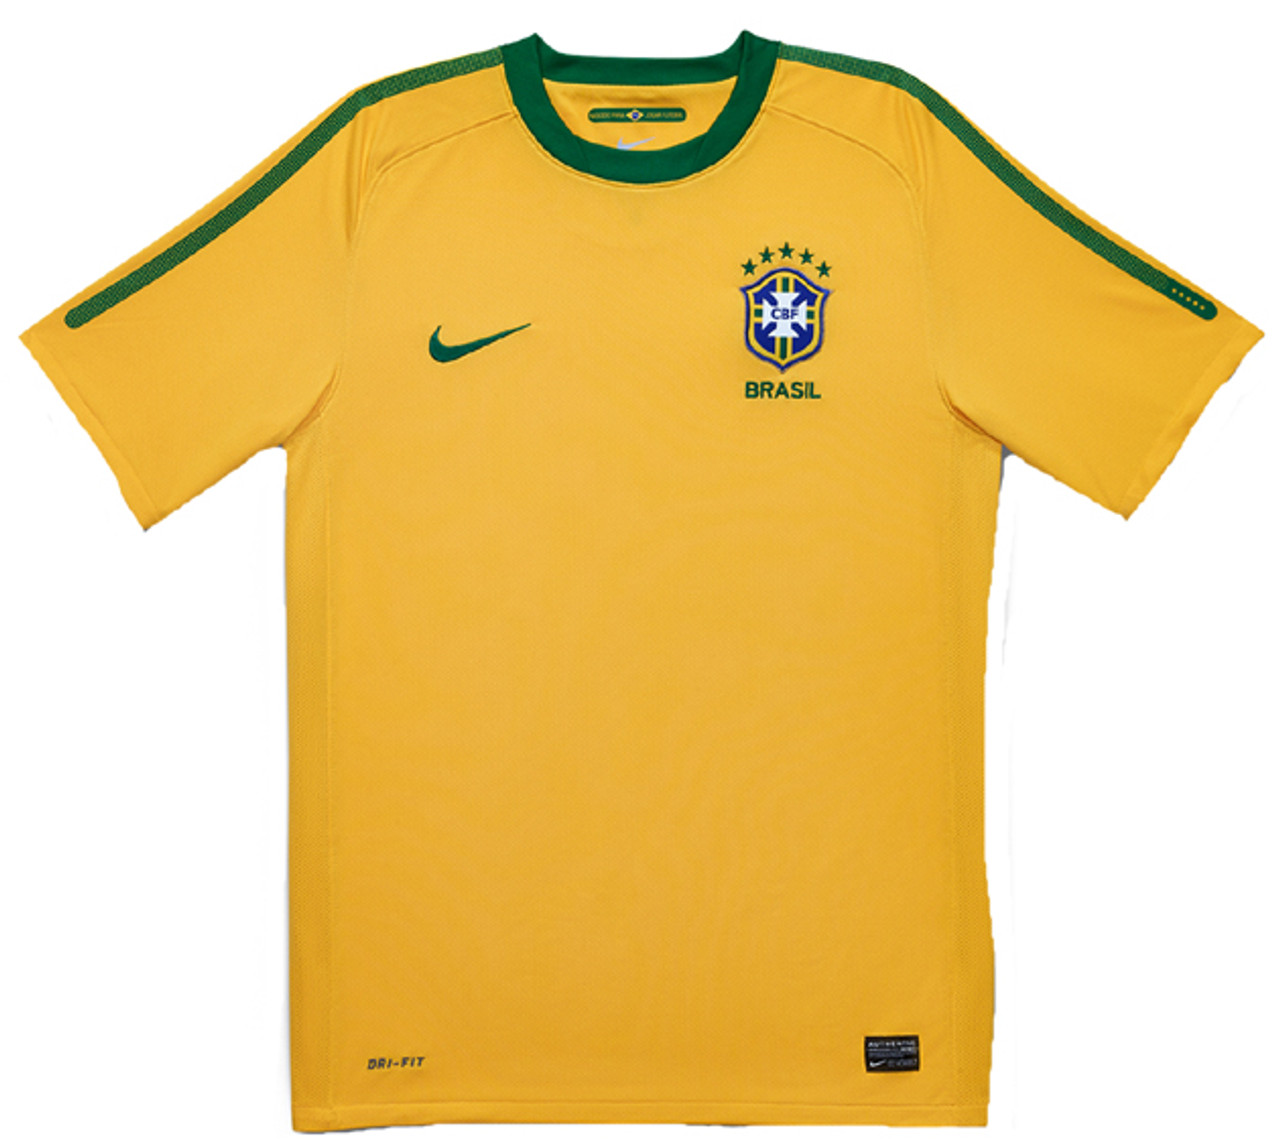 brazil jersey 2010